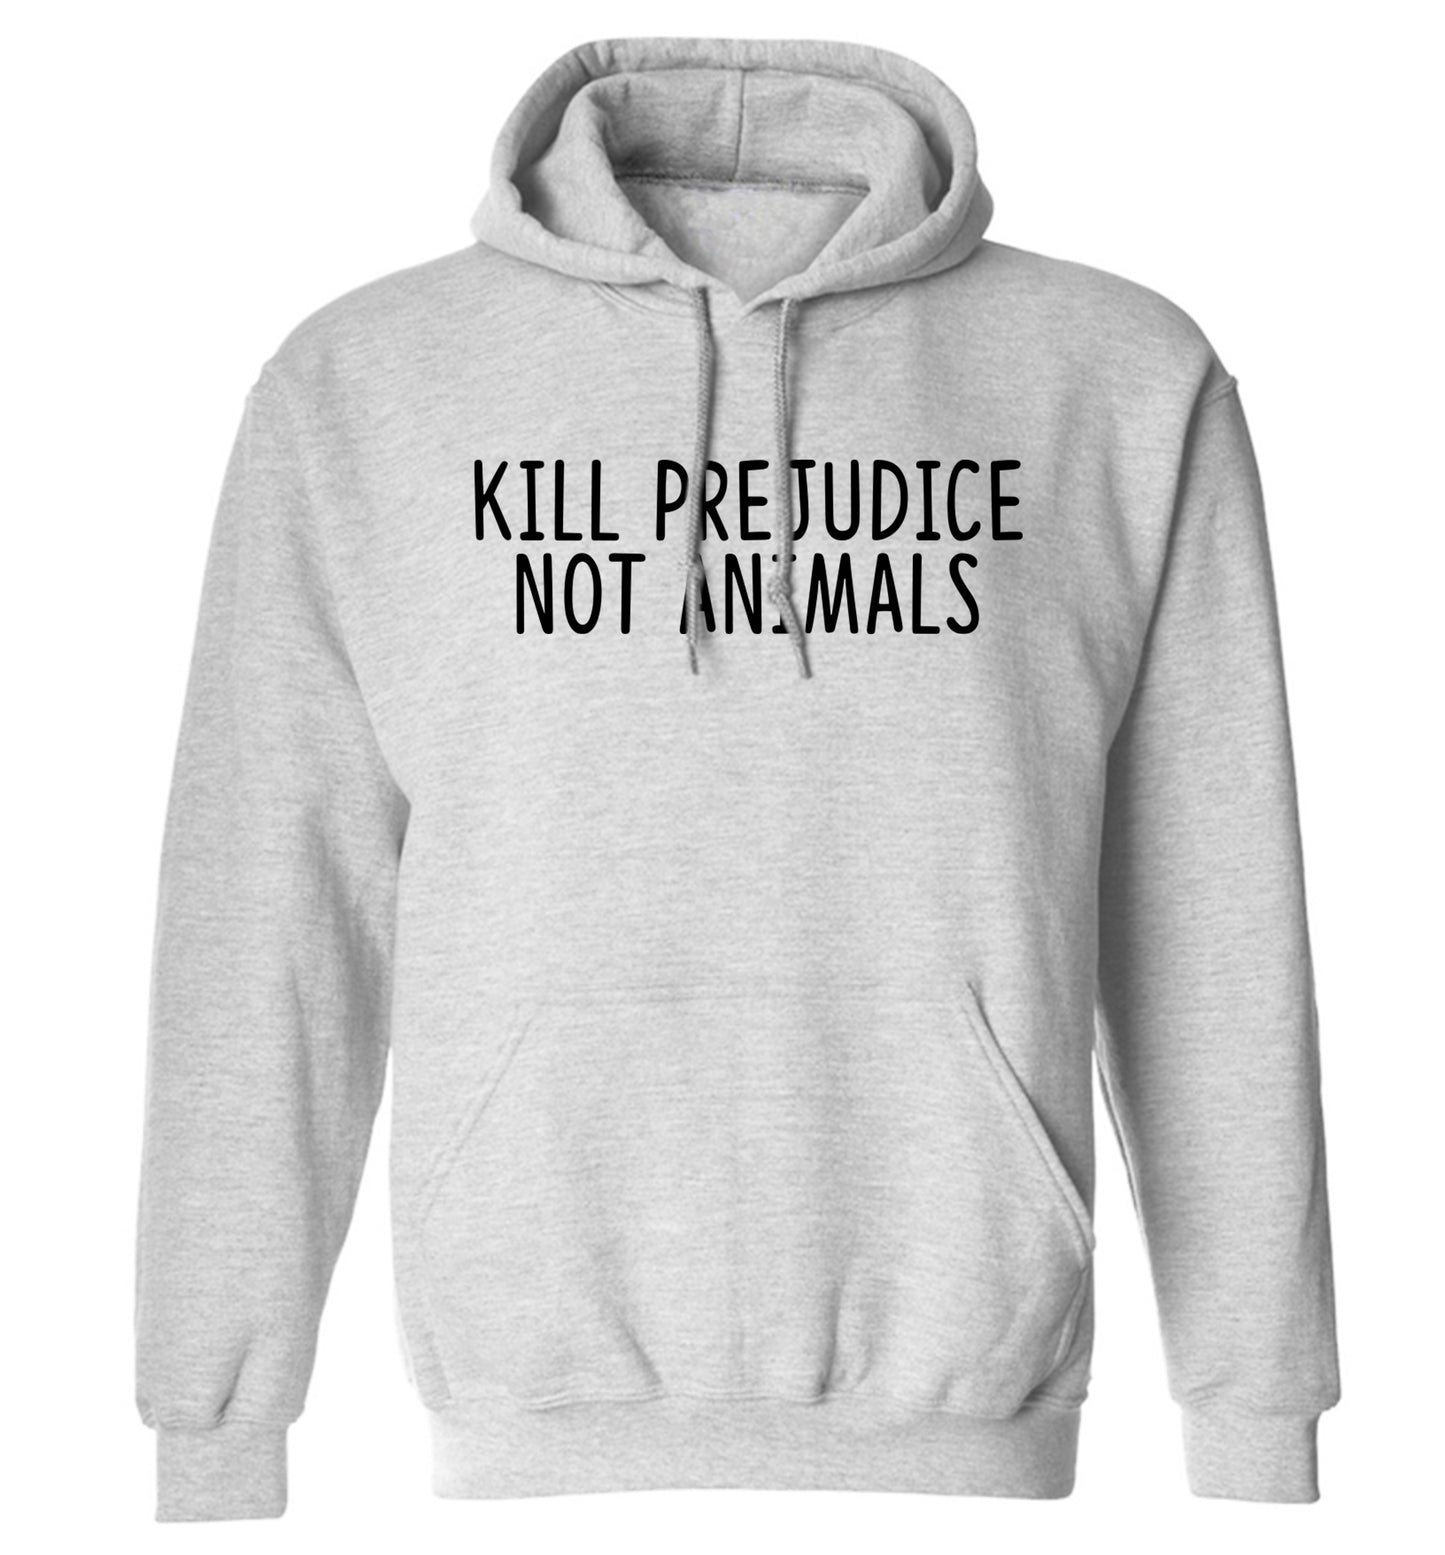 Kill Prejudice Not Animals adults unisex grey hoodie 2XL